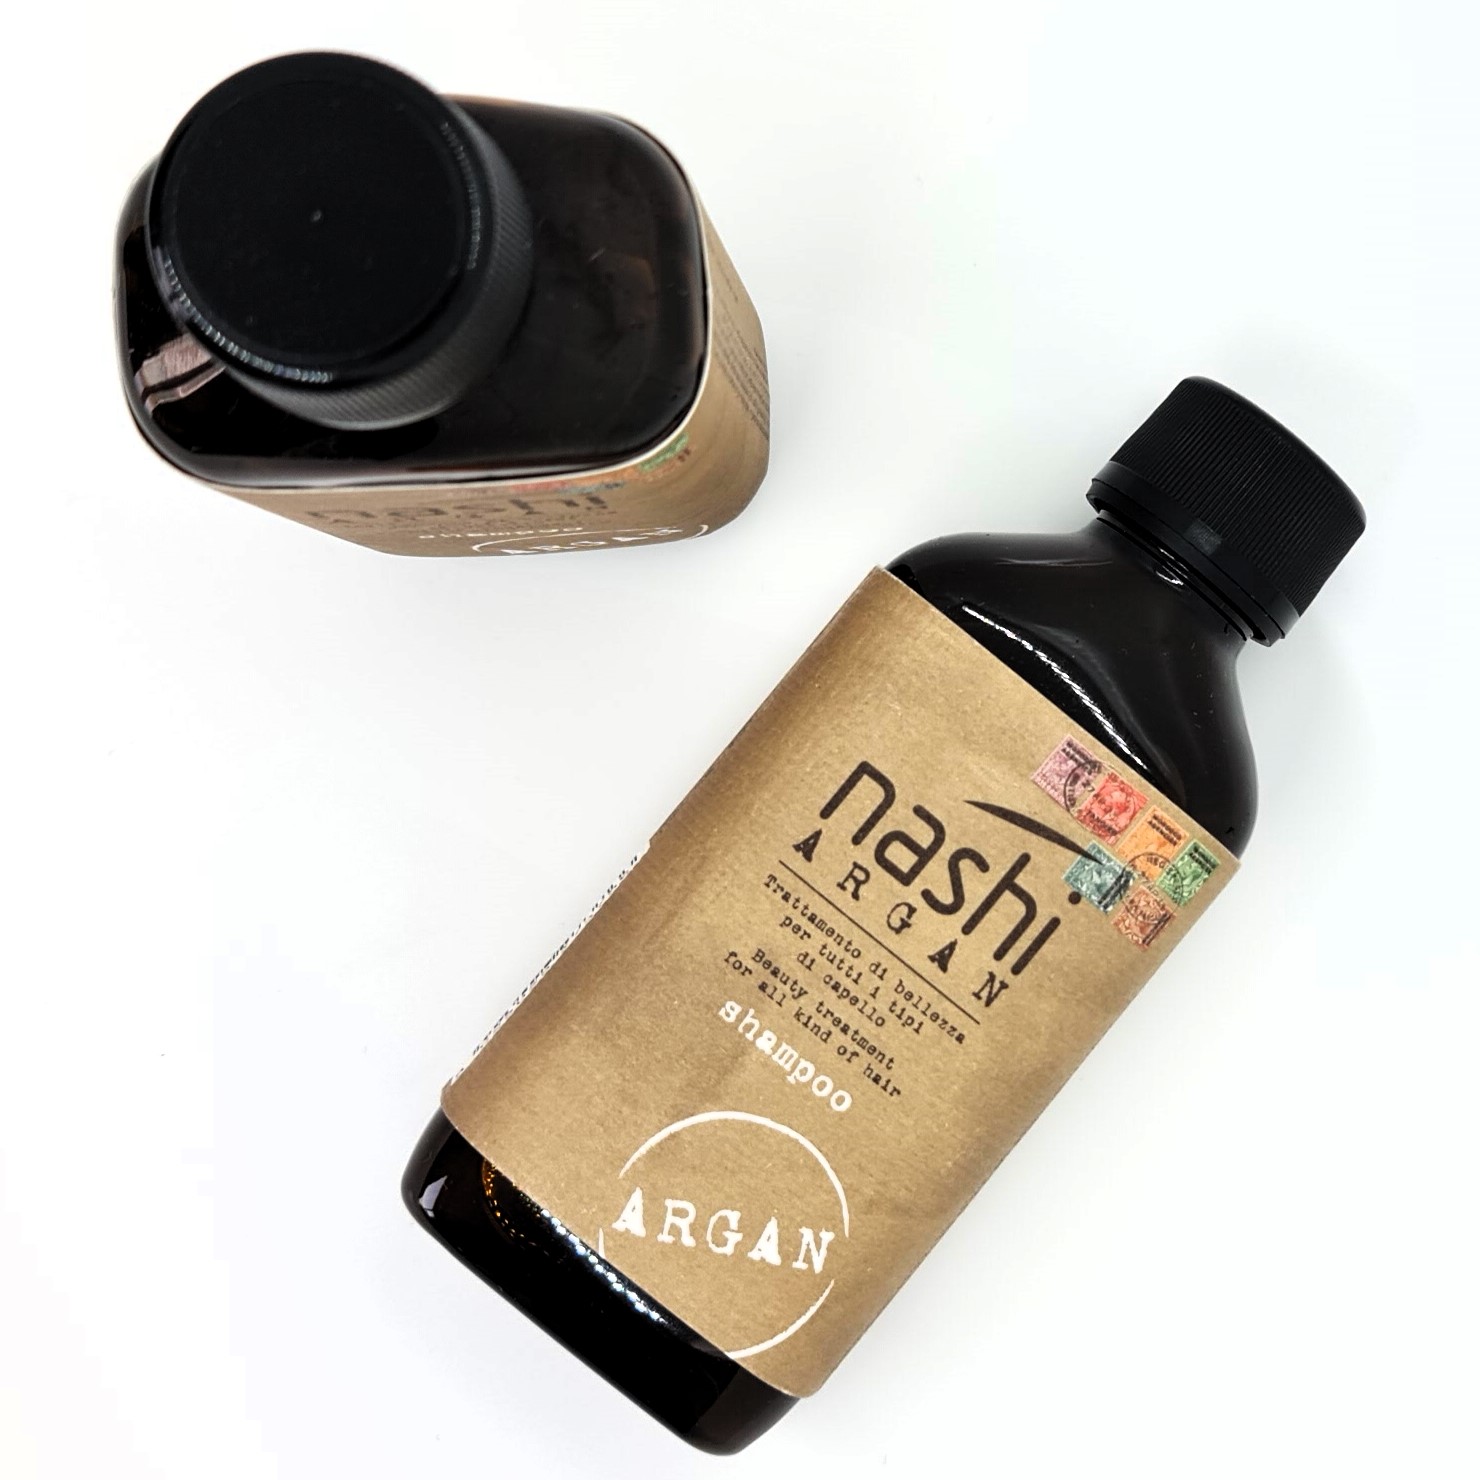 Nashi Argan Treatment Hair Oil 30ml